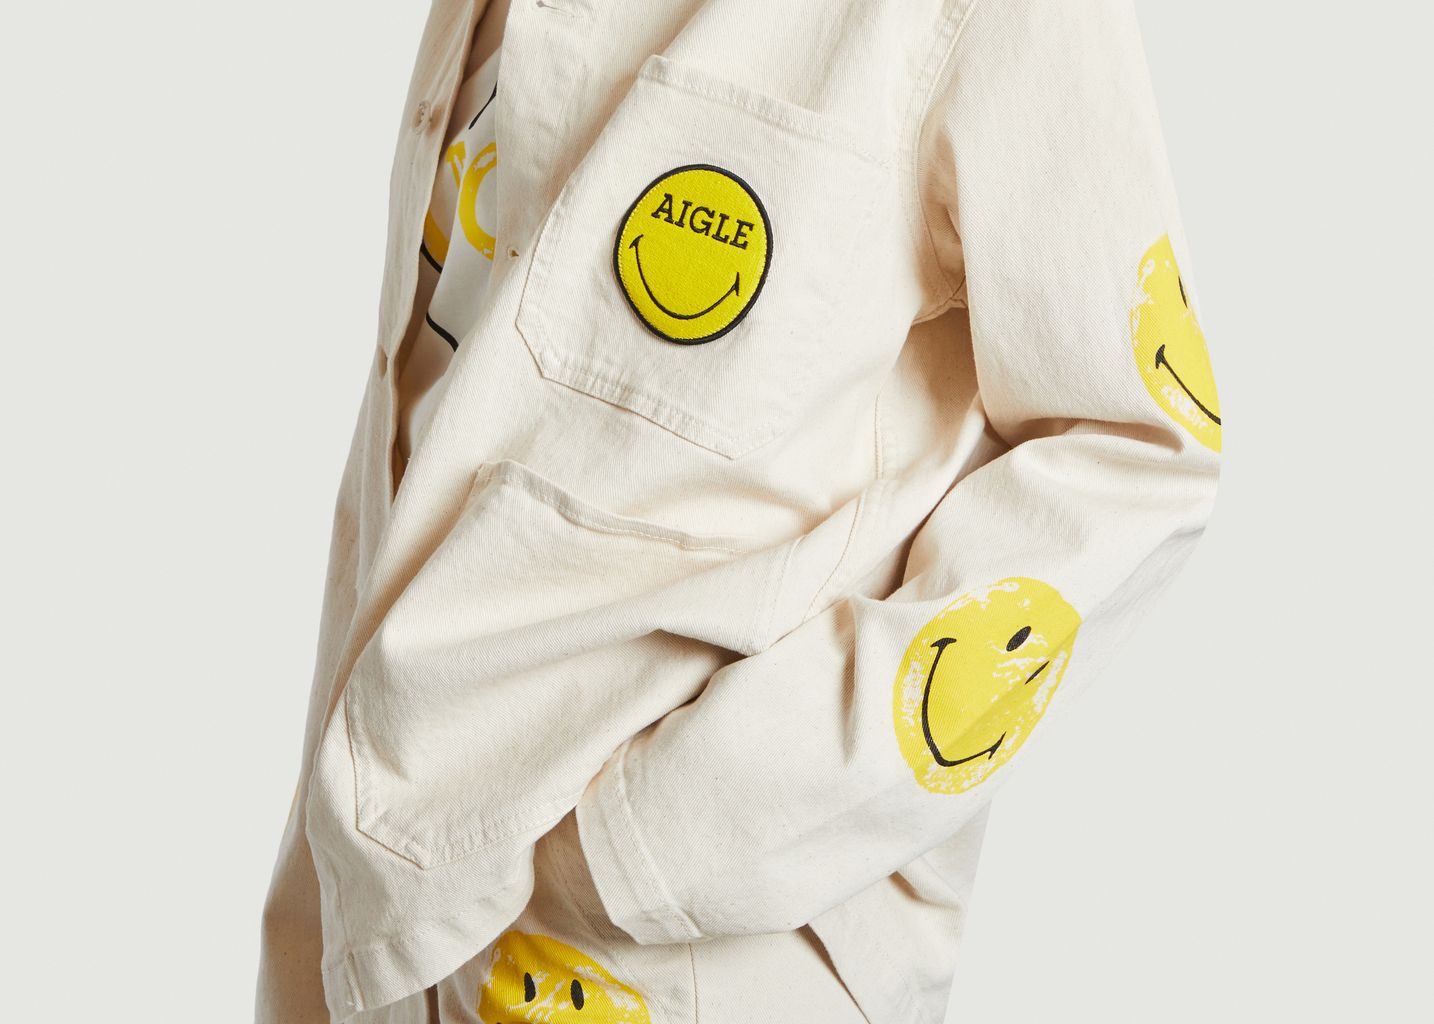 Jacke Aigle x Smiley U JKT01 - Aigle